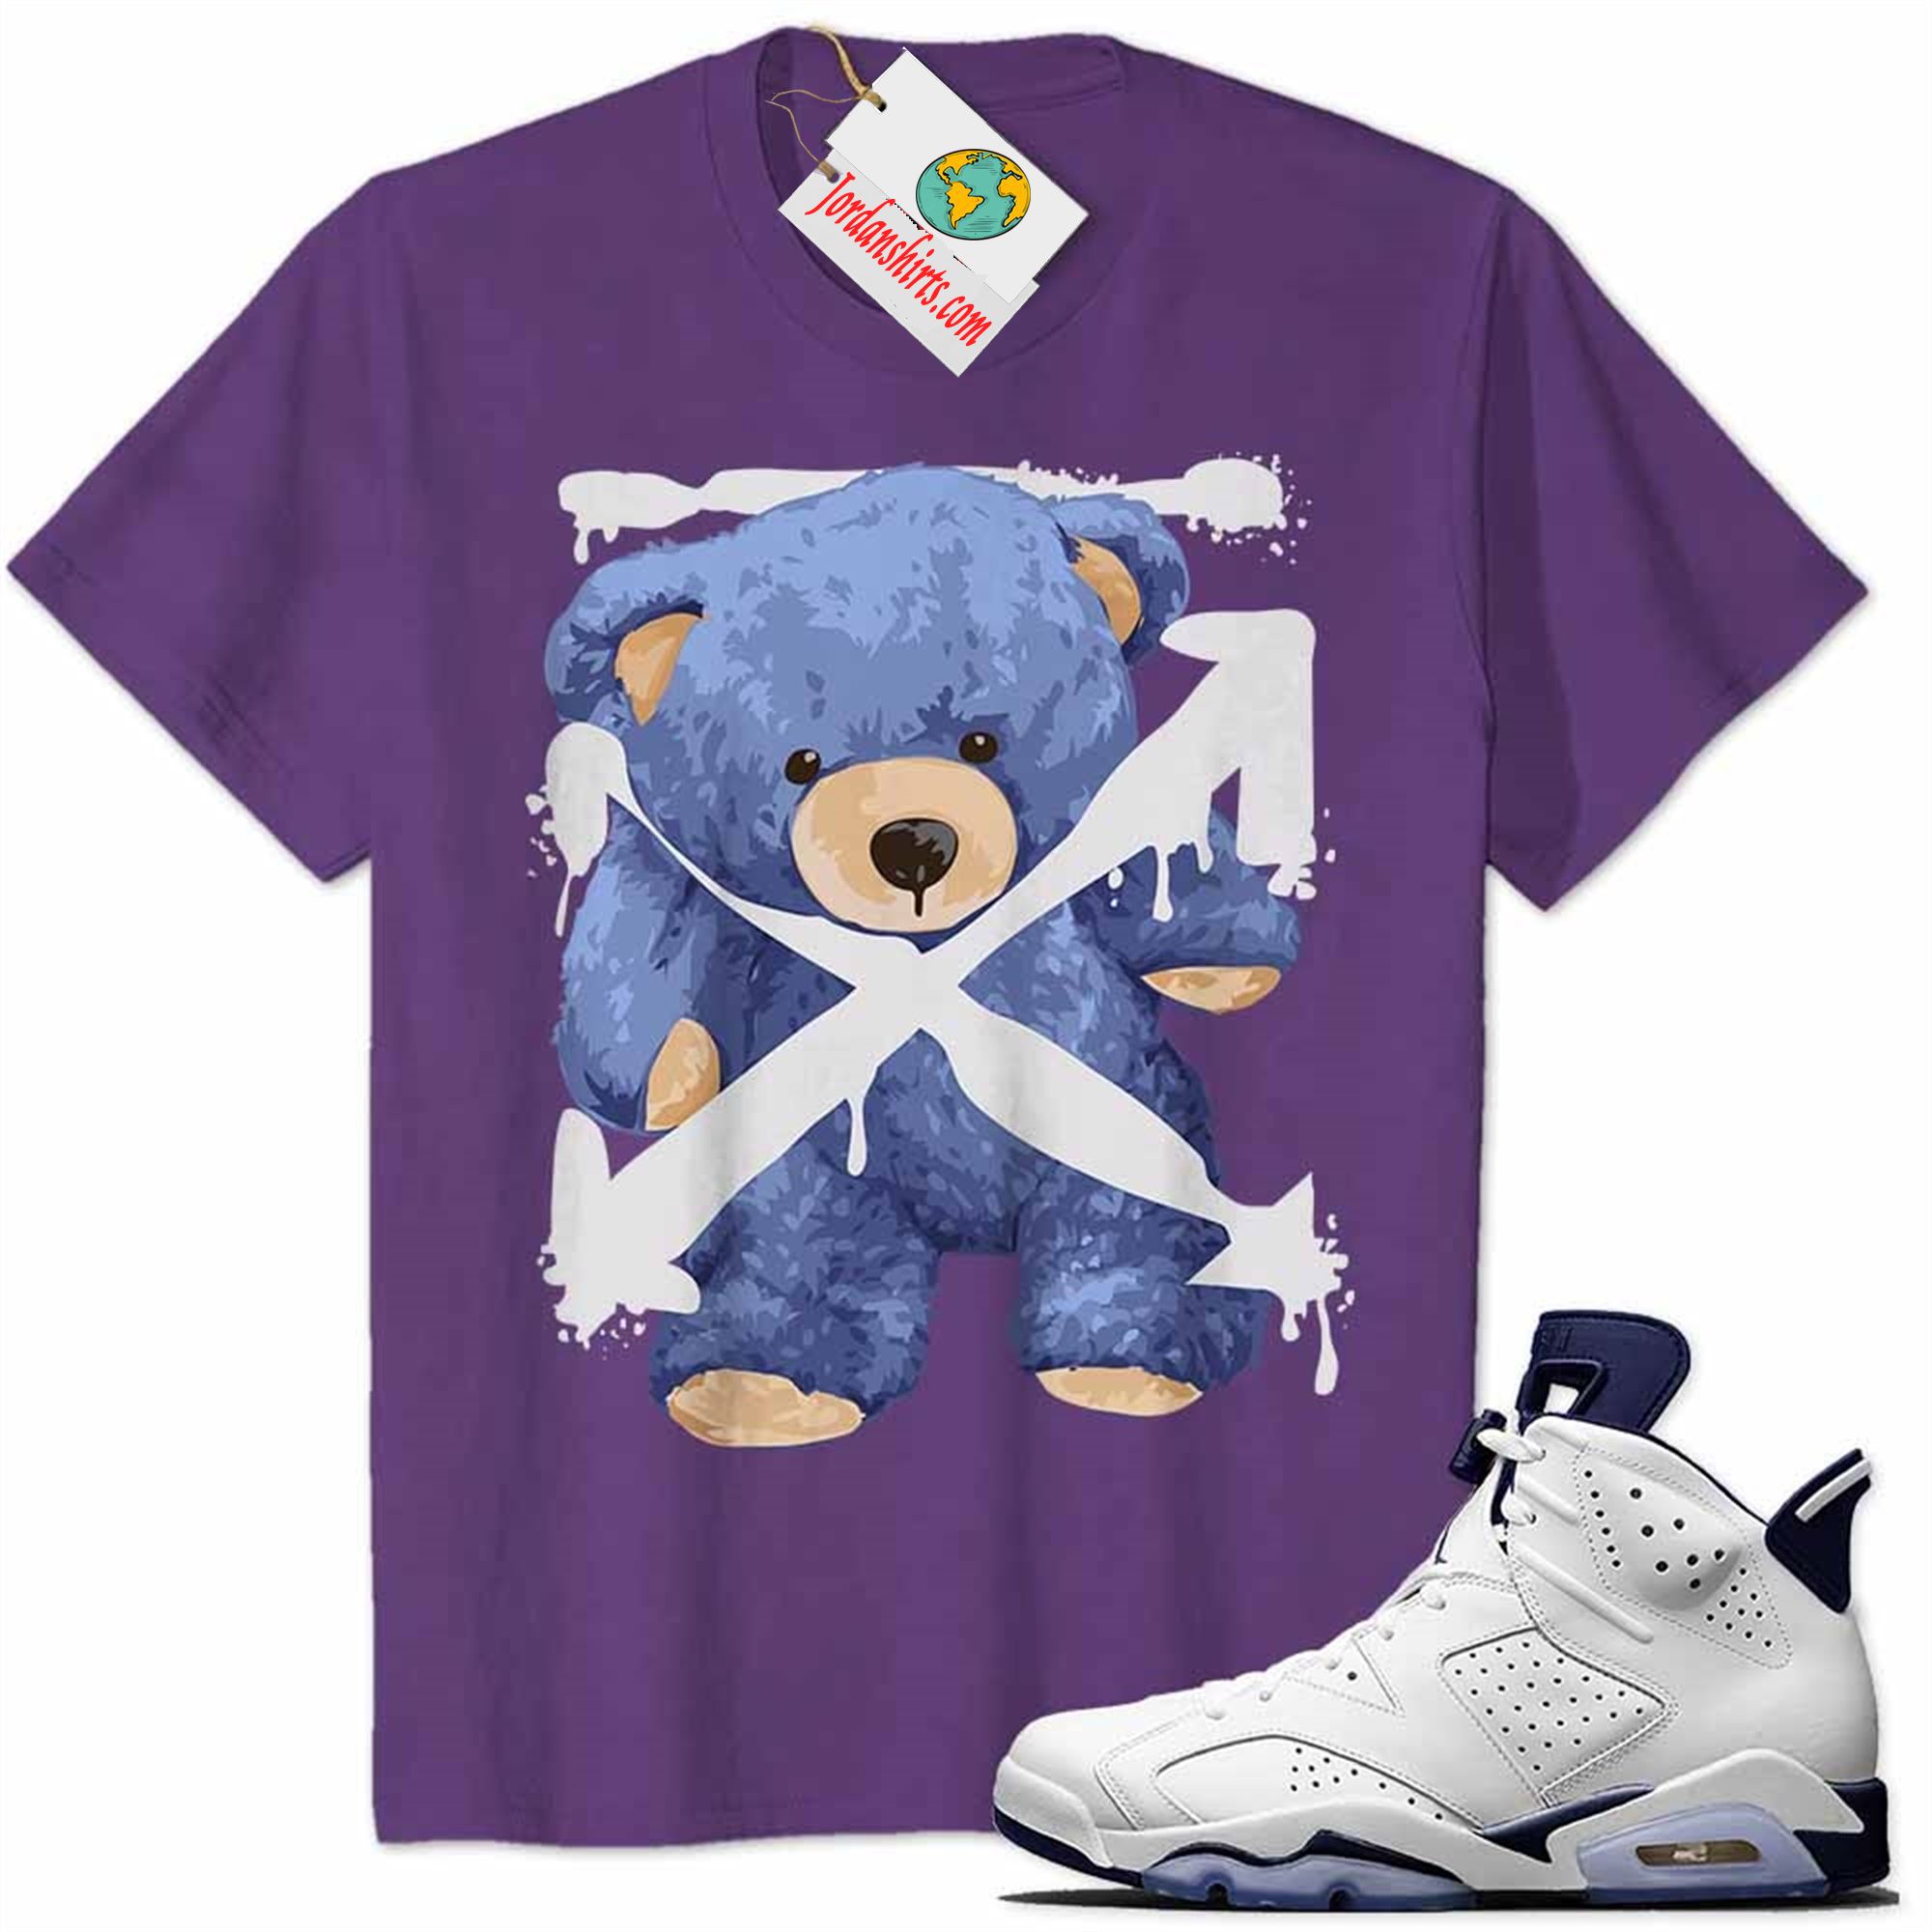 Jordan 6 Shirt, Teddy Bear Off White Paint Dripping Purple Air Jordan 6 Midnight Navy 6s Full Size Up To 5xl